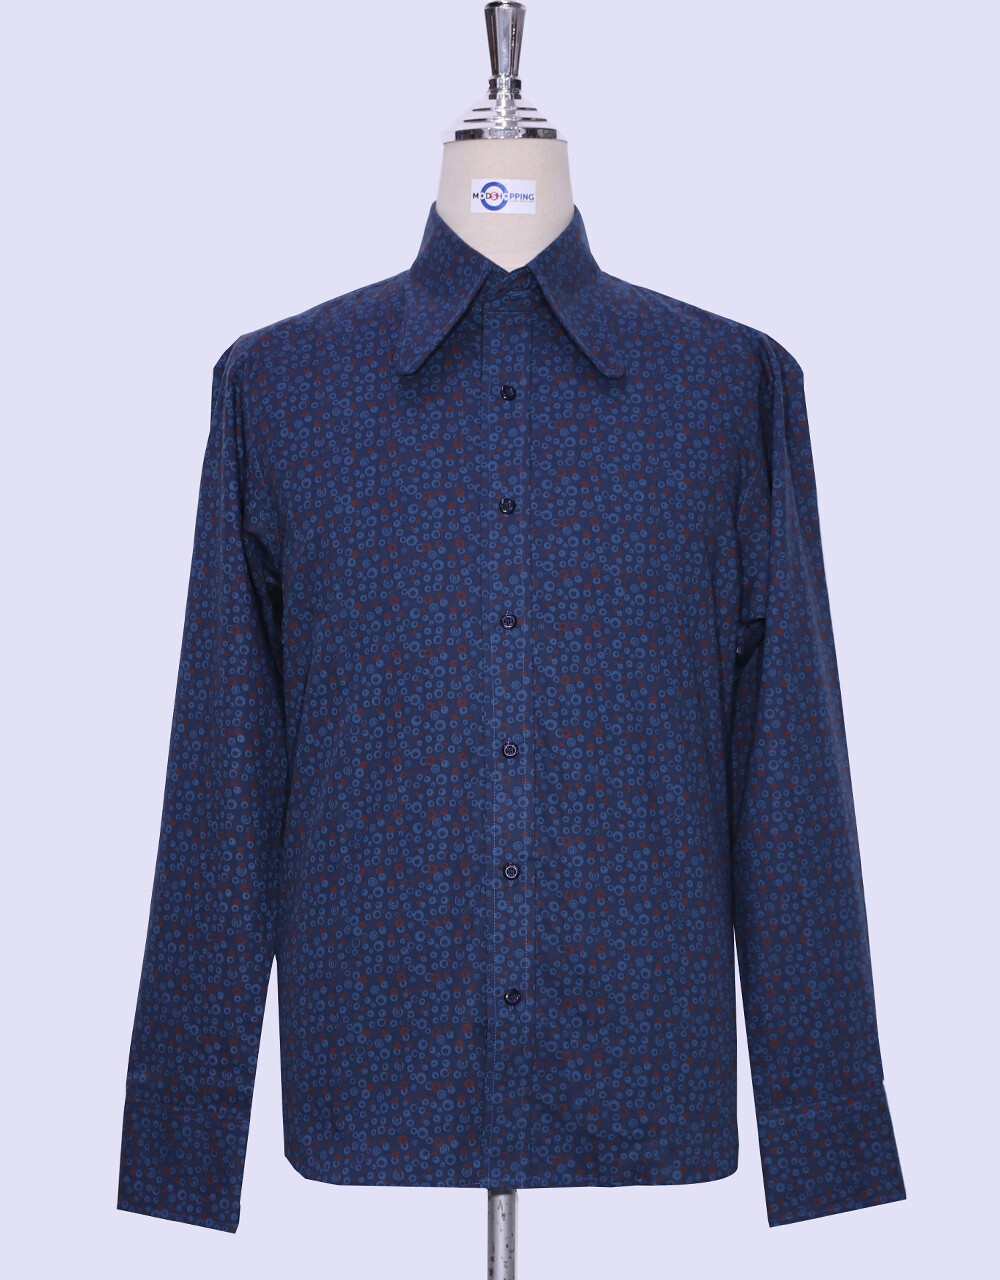 Hight Penny Collar Shirt | Navy Blue Circle Pattern Shirt